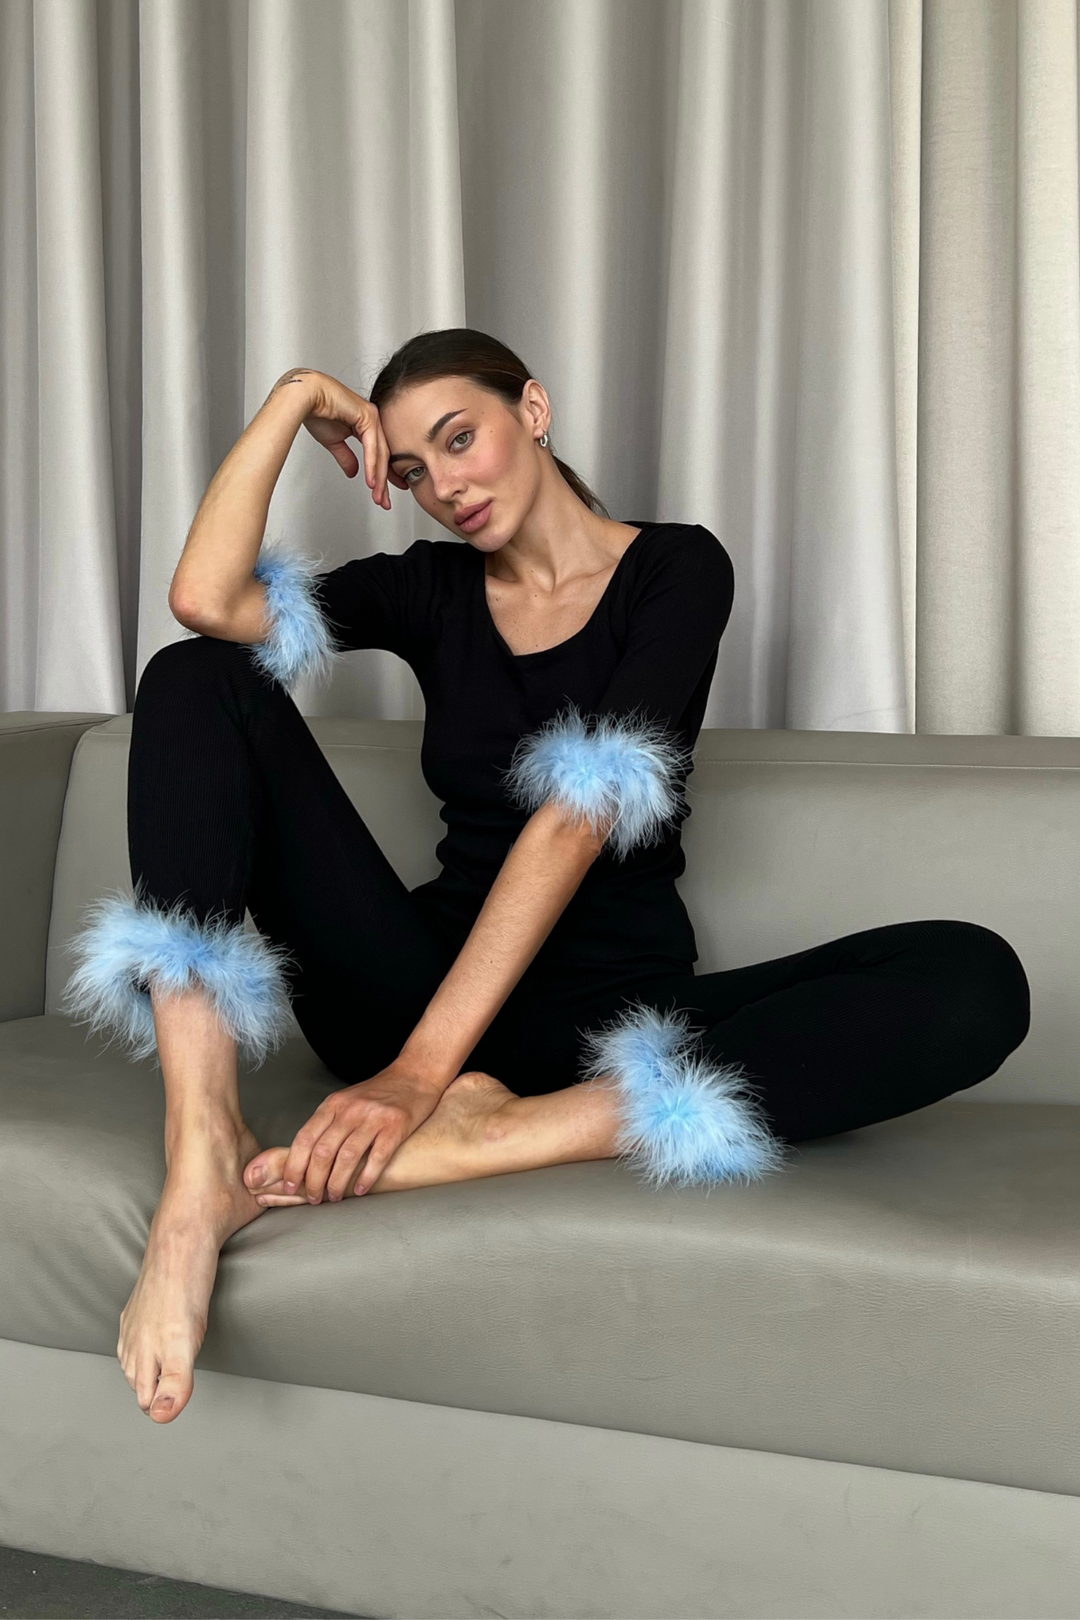 Olivia Pajama Suit with light blue Feathers